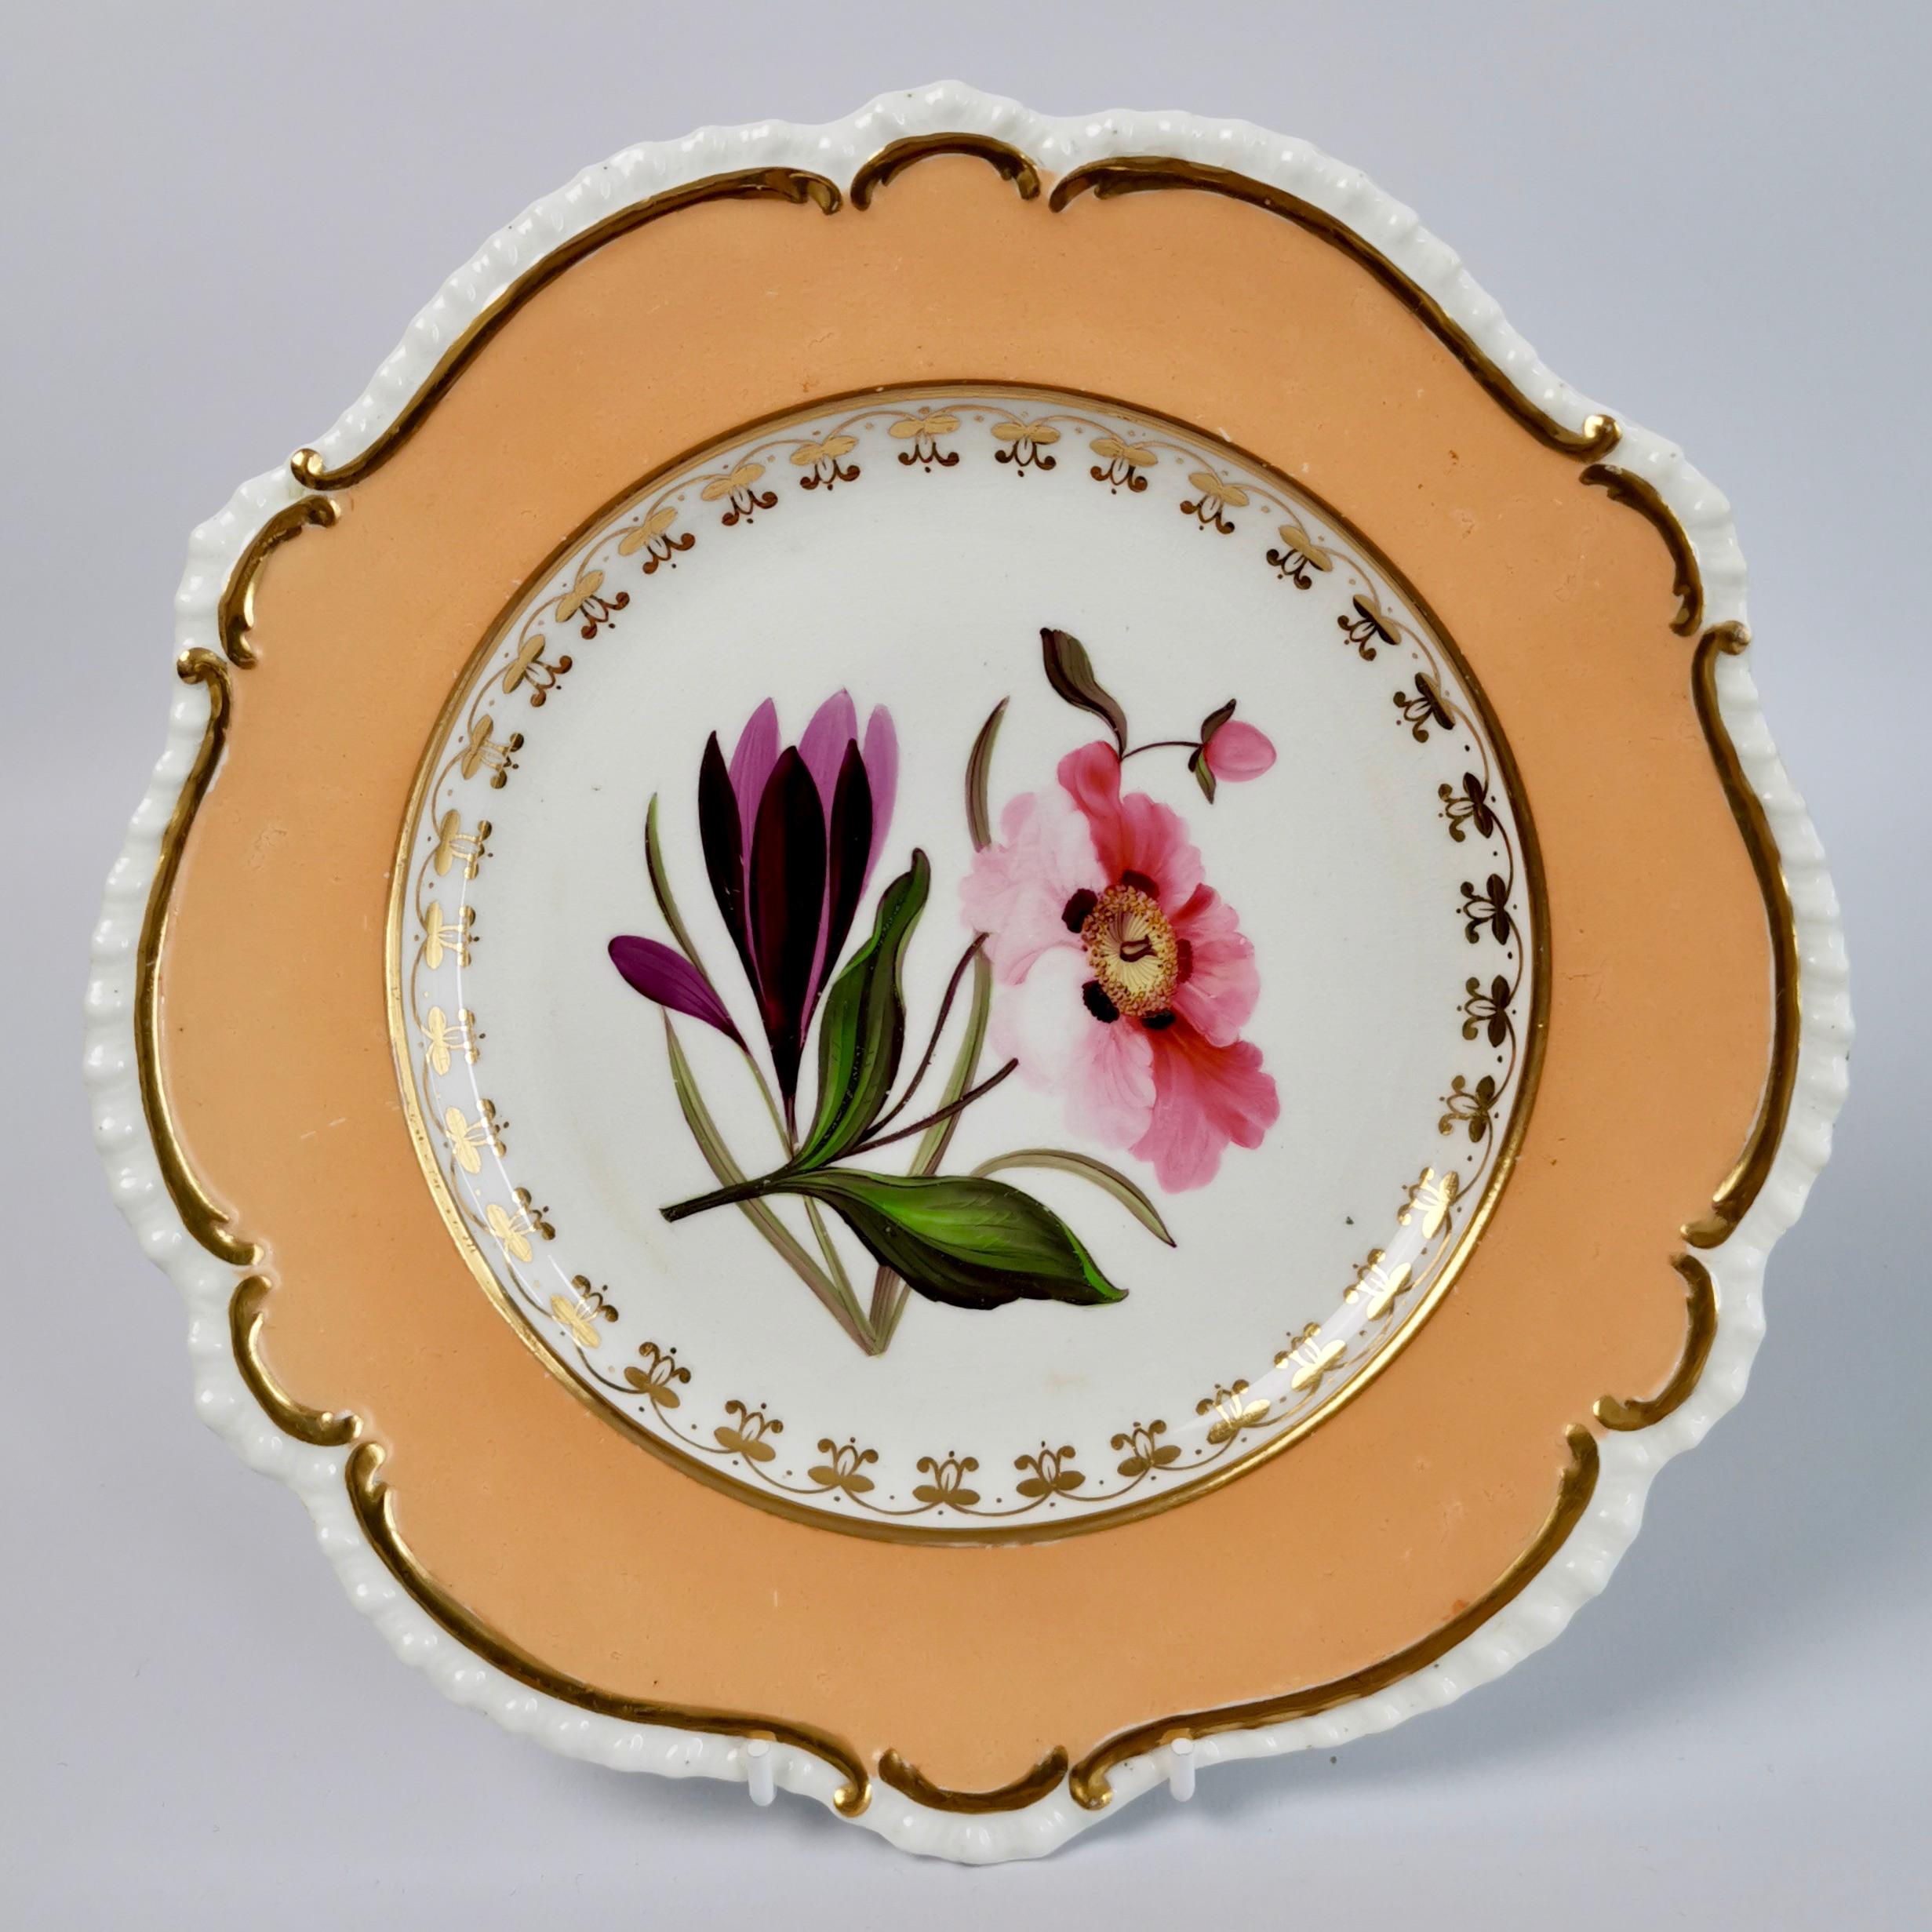 English Coalport Set of 8 Porcelain Plates, Peach with Flowers, Regency 1820-1825